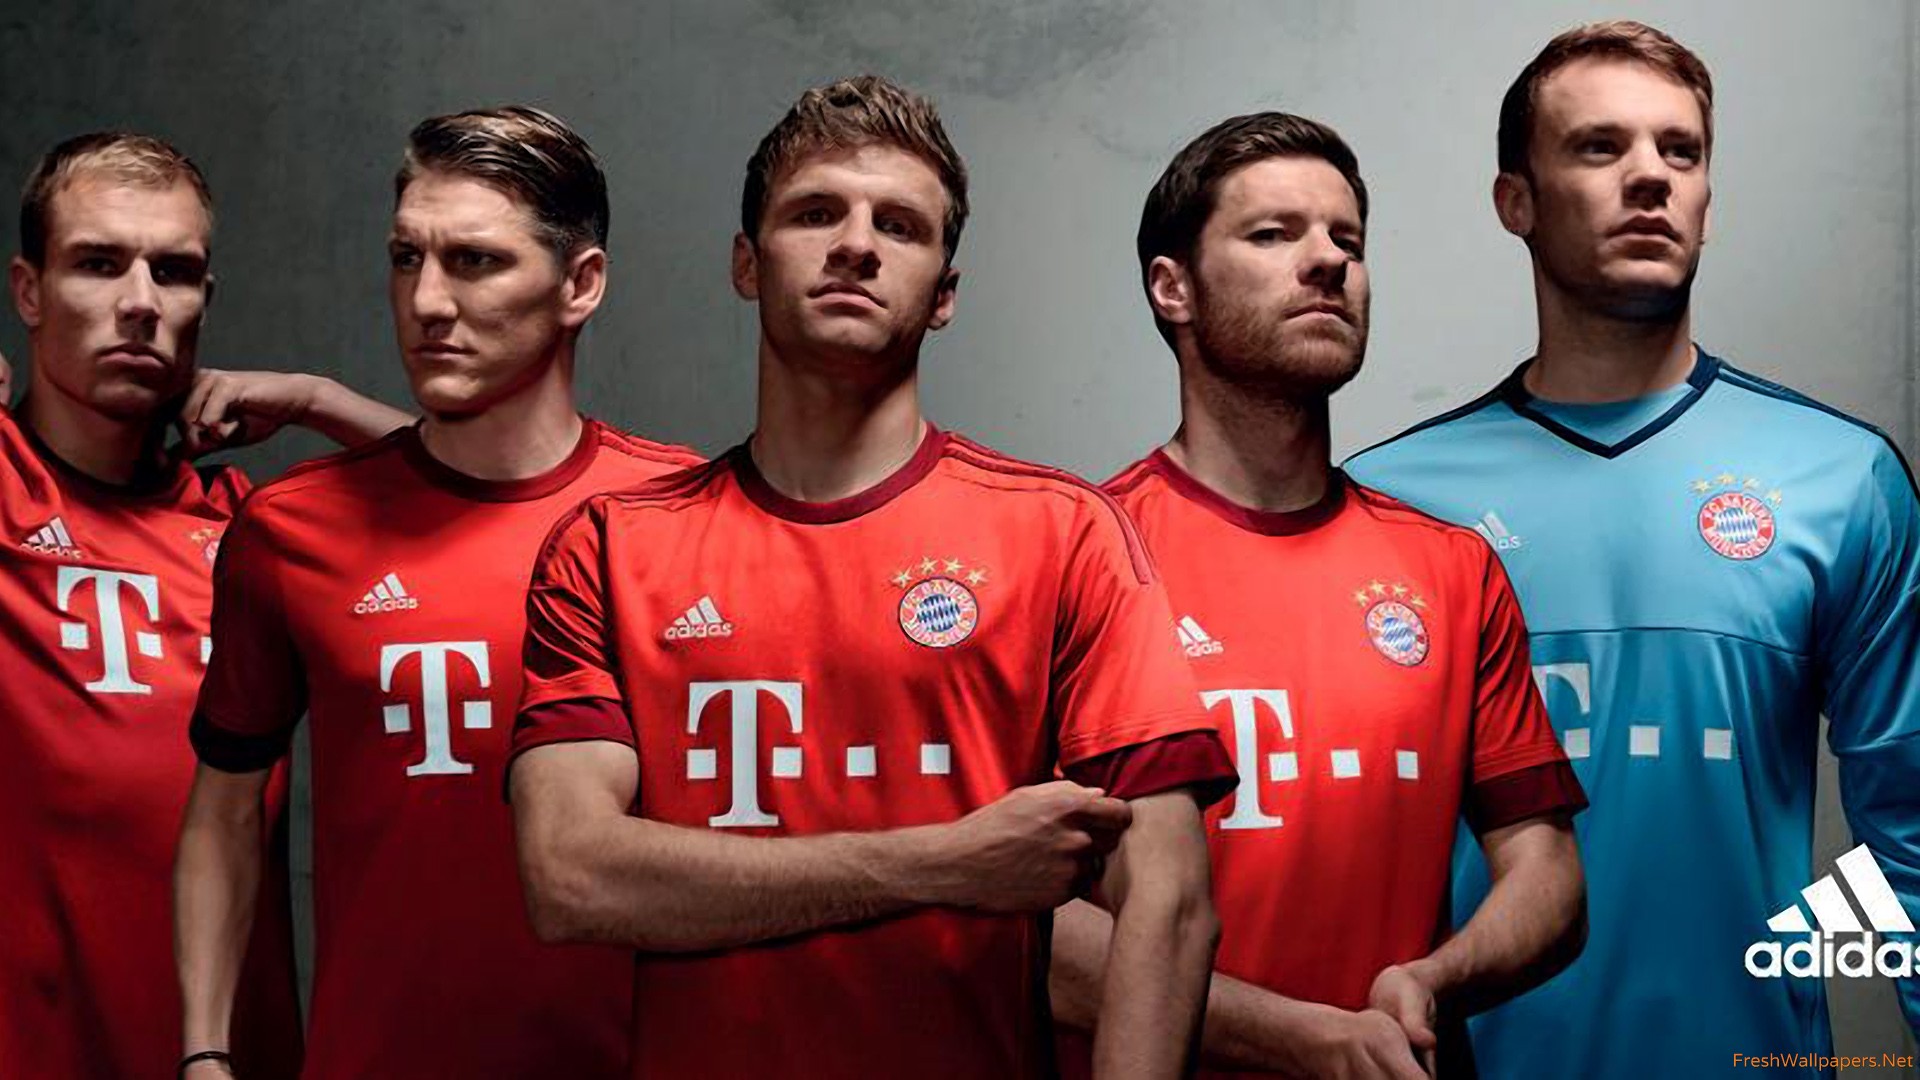 FC Bayern Munchen 2015-2016 wallpapers | Freshwallpapers